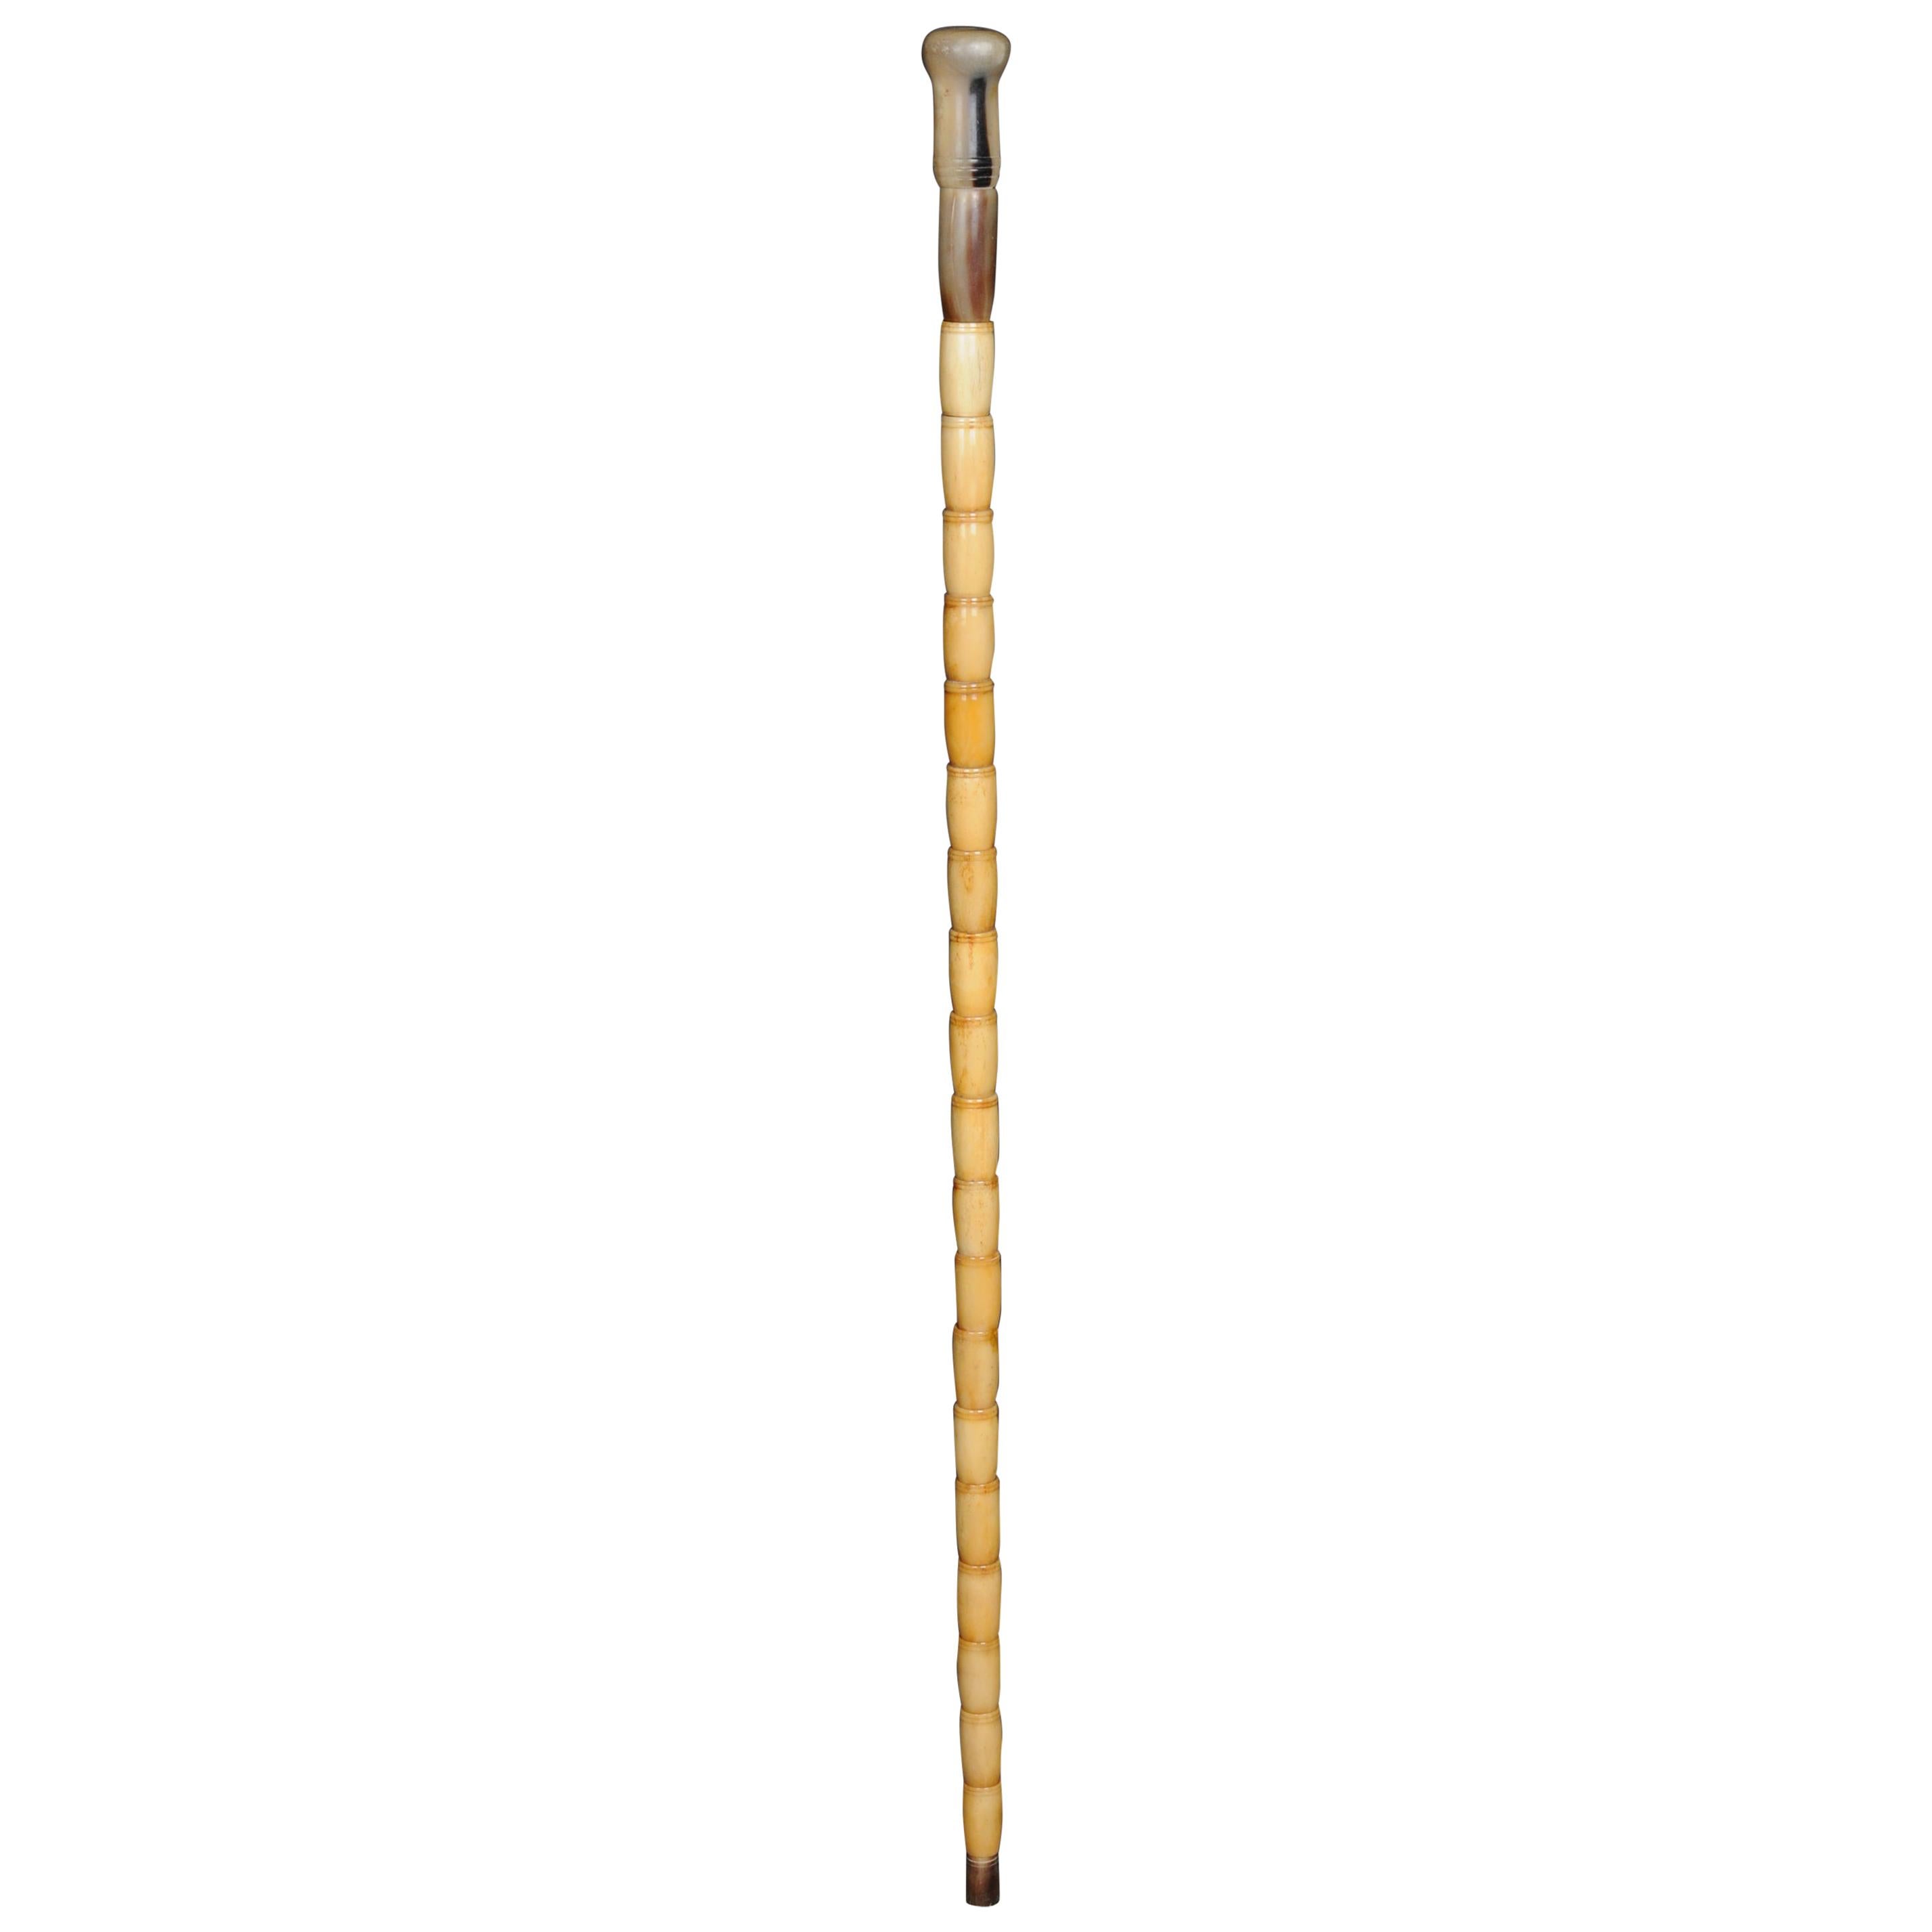 Unique Walking Stick / Strolling Stick 19th Century, Bone For Sale